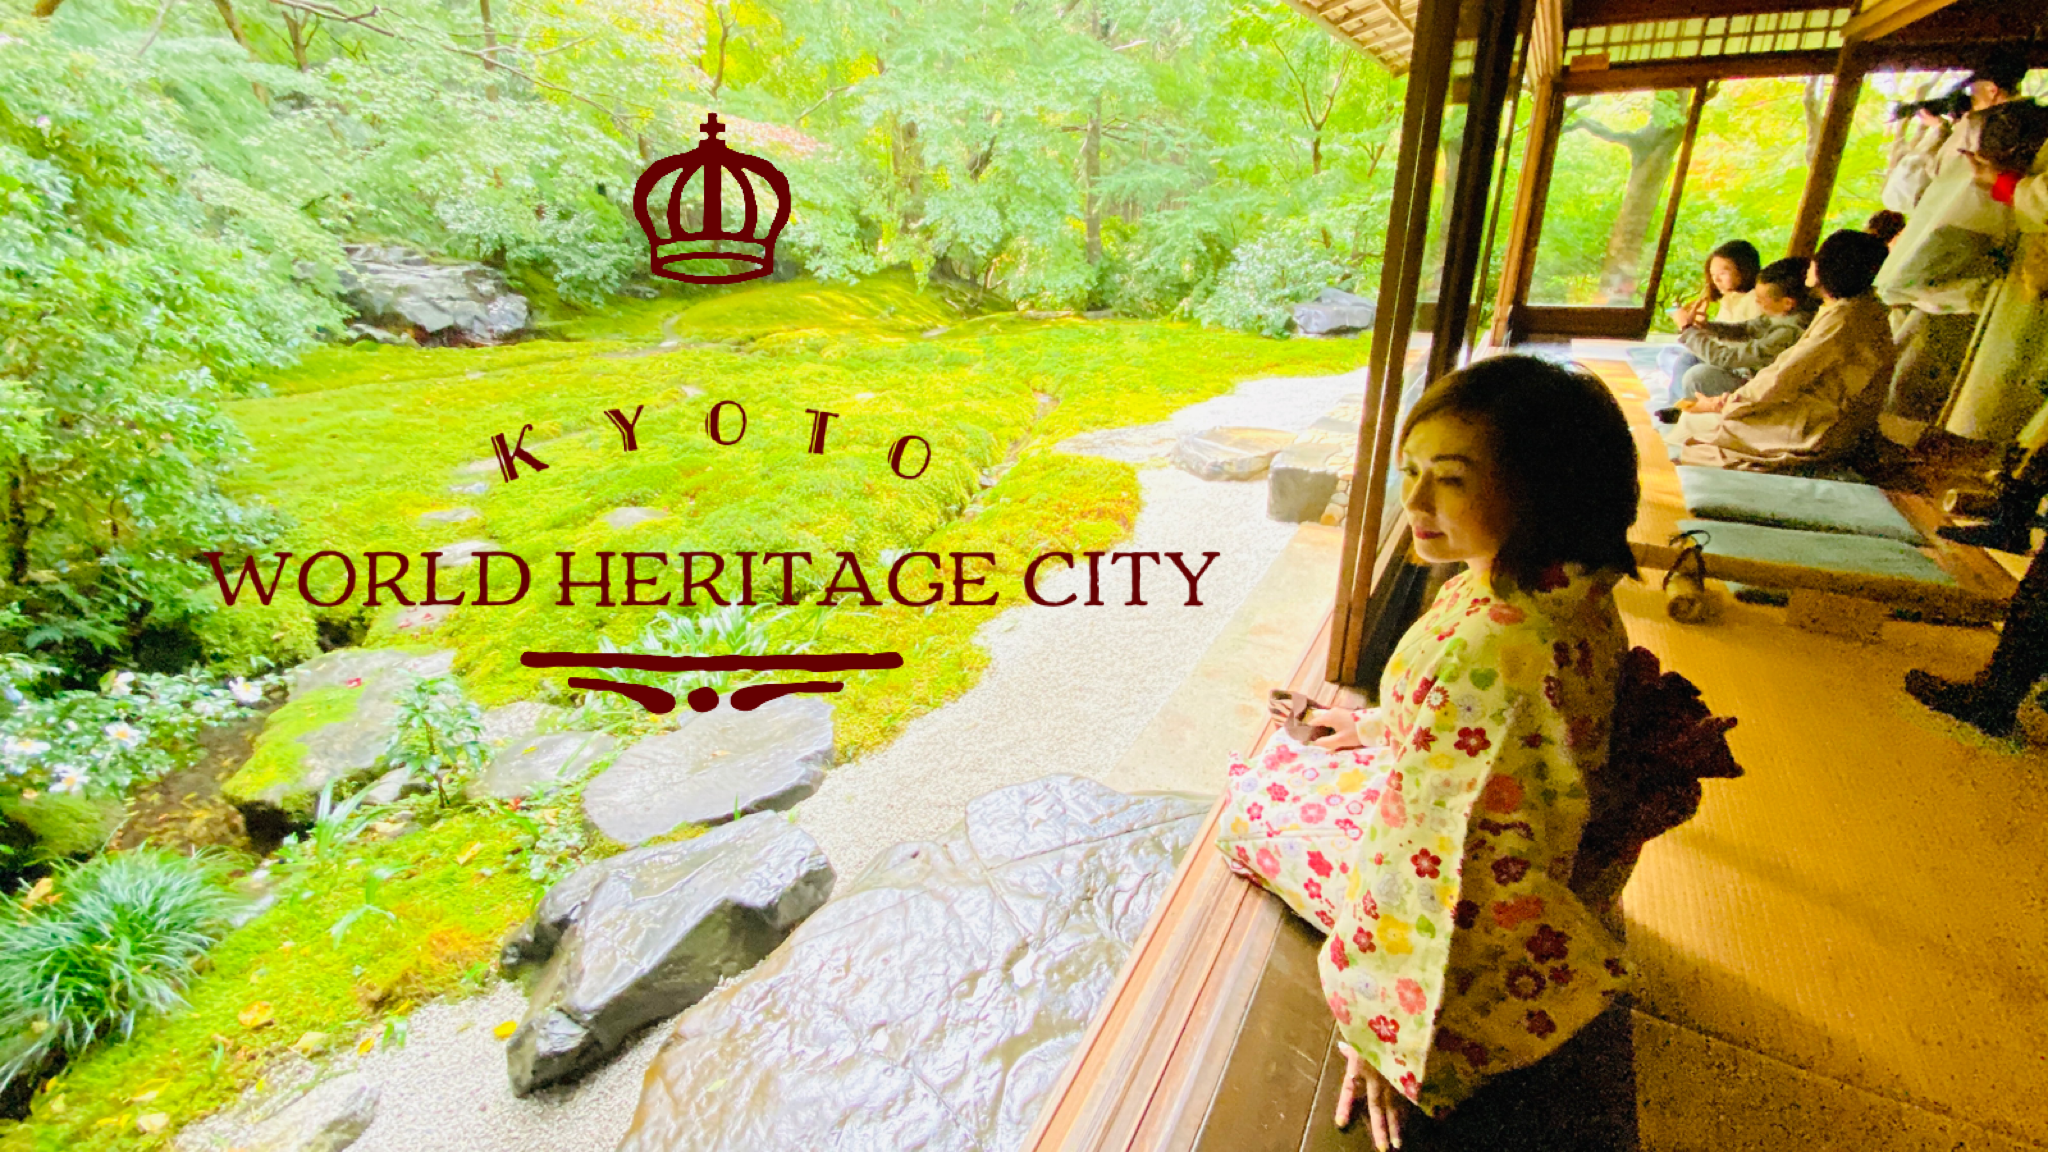 Kyoto world heritage city